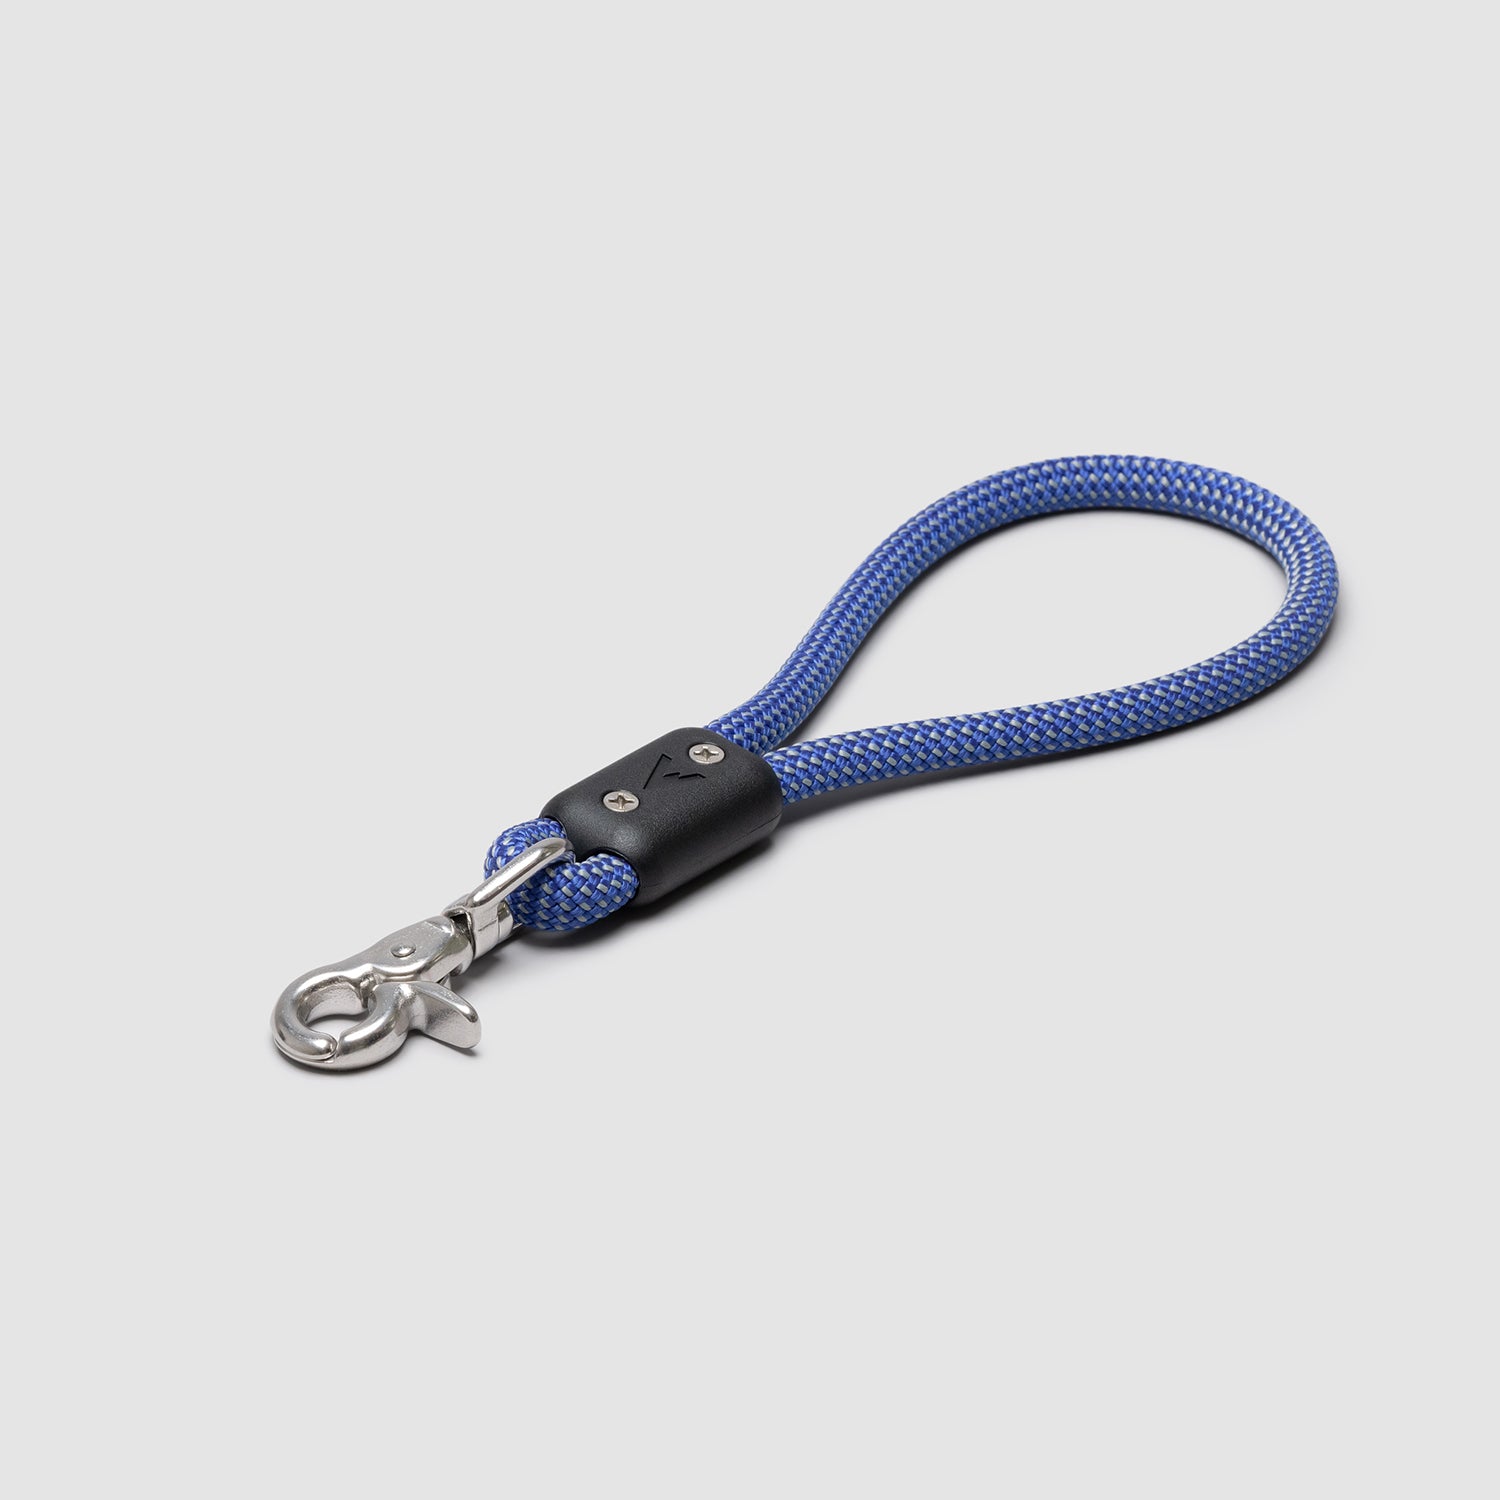 atlas pet company lifetime handle climbing rope lifetime warranty trail handle for active dogs --twilight